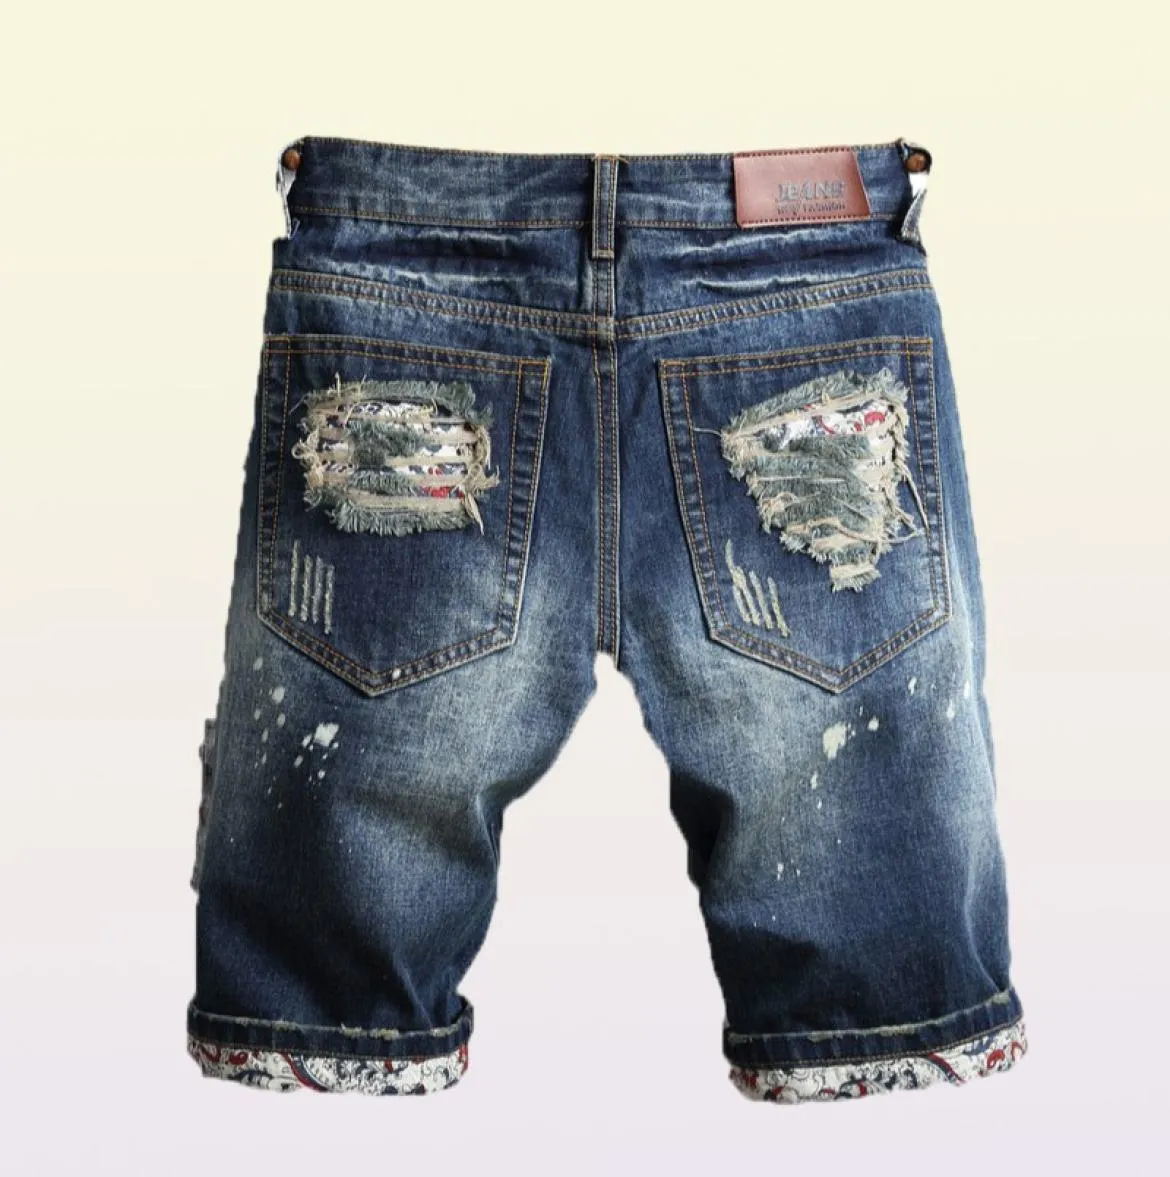 Slim Jeans Shorts Men Brand Ripped Summer Capri Men039s Fashion Biker Casual Elasticity Distressed Hole Blue Denim Short Jean3725090